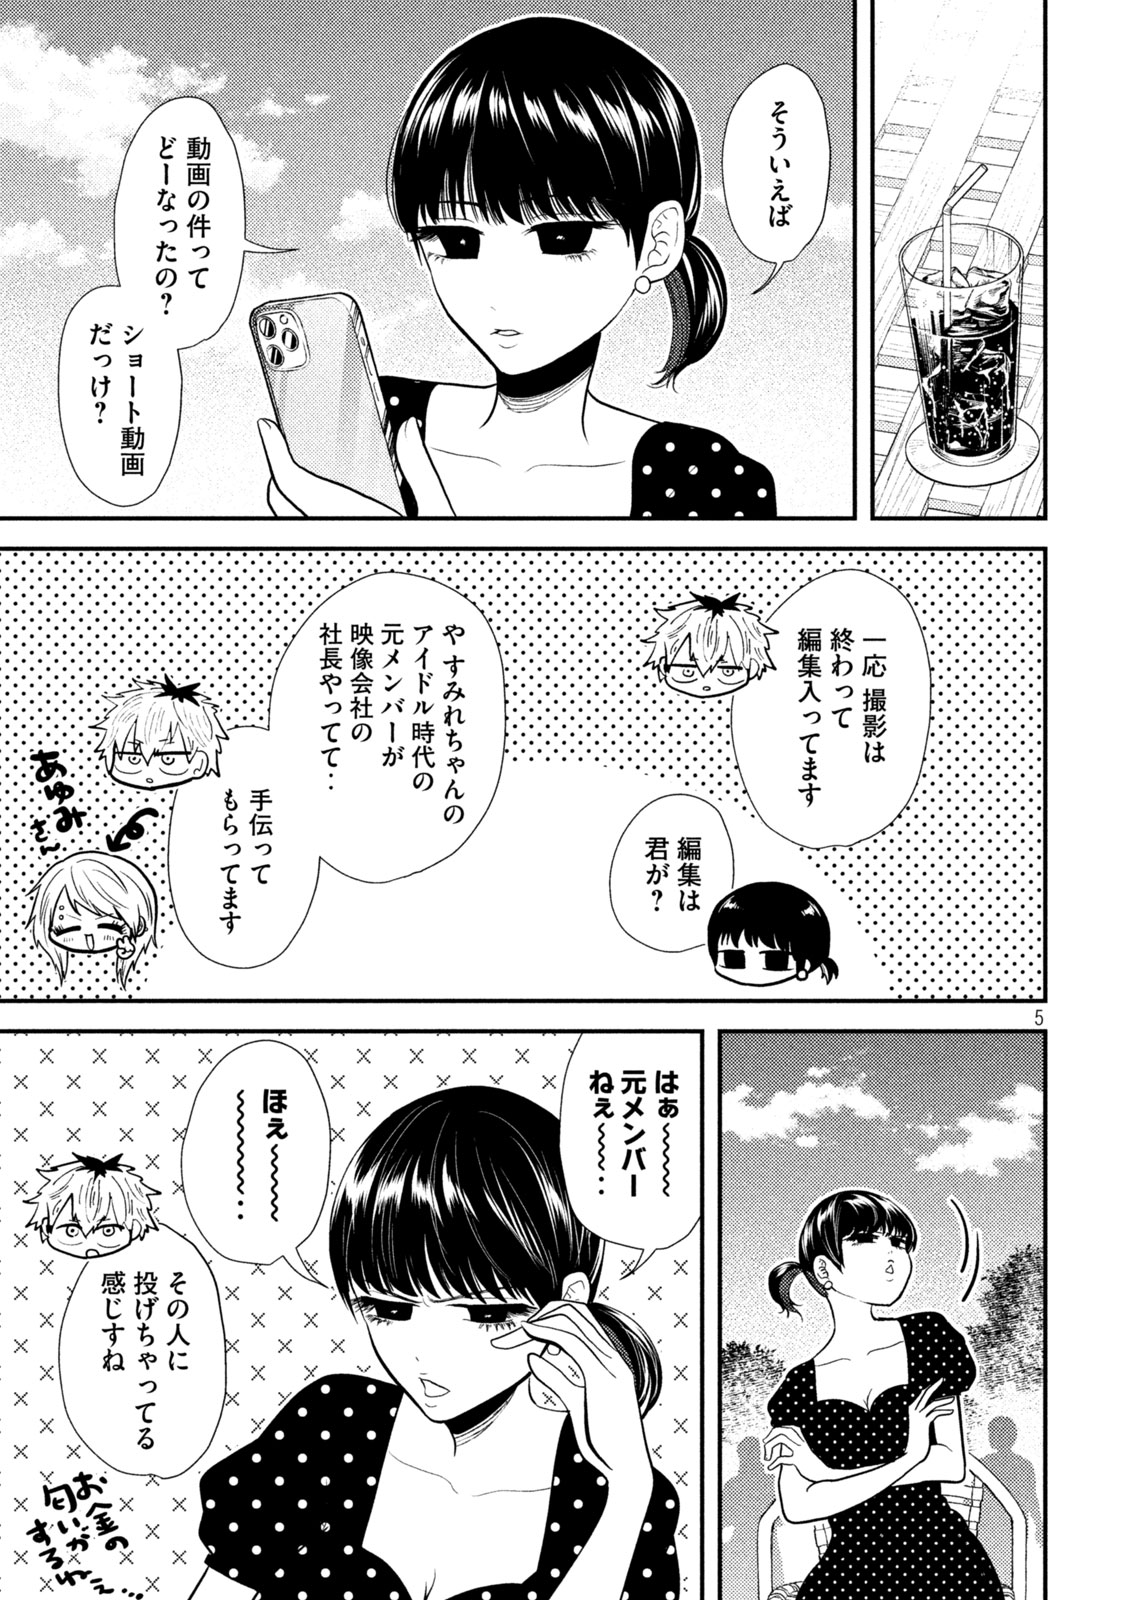 Heisei Haizanhei Sumire-chan - Chapter 22 - Page 5